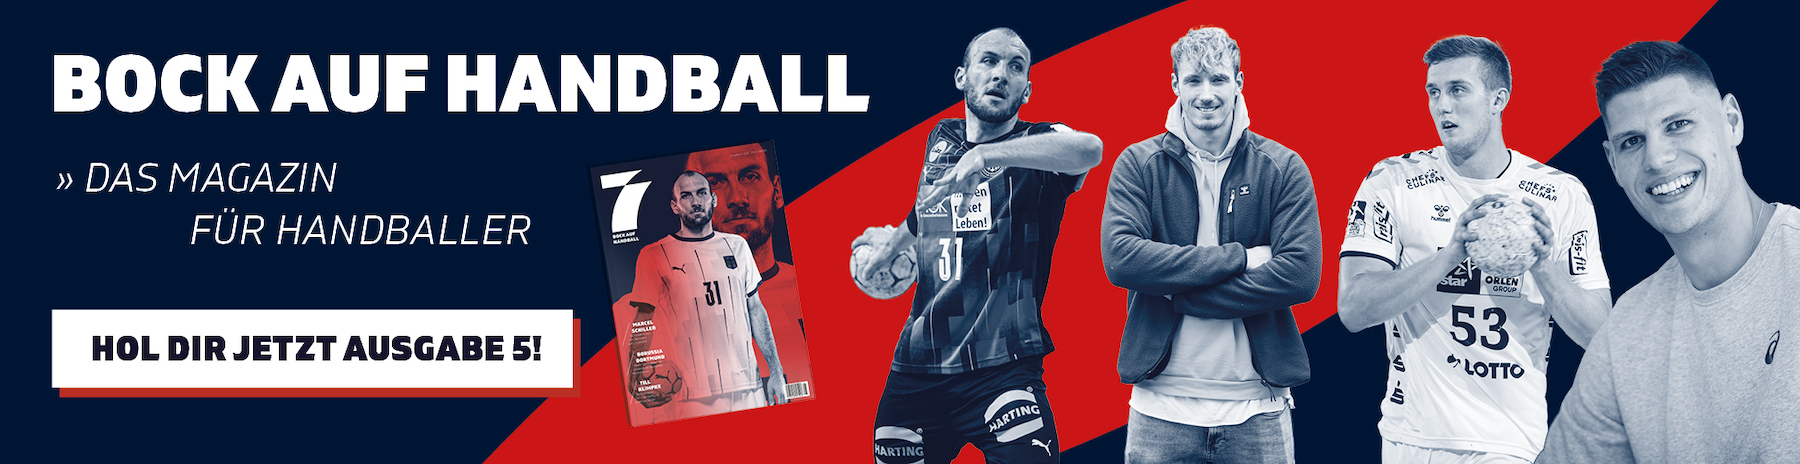 www.bock-auf-handball.de